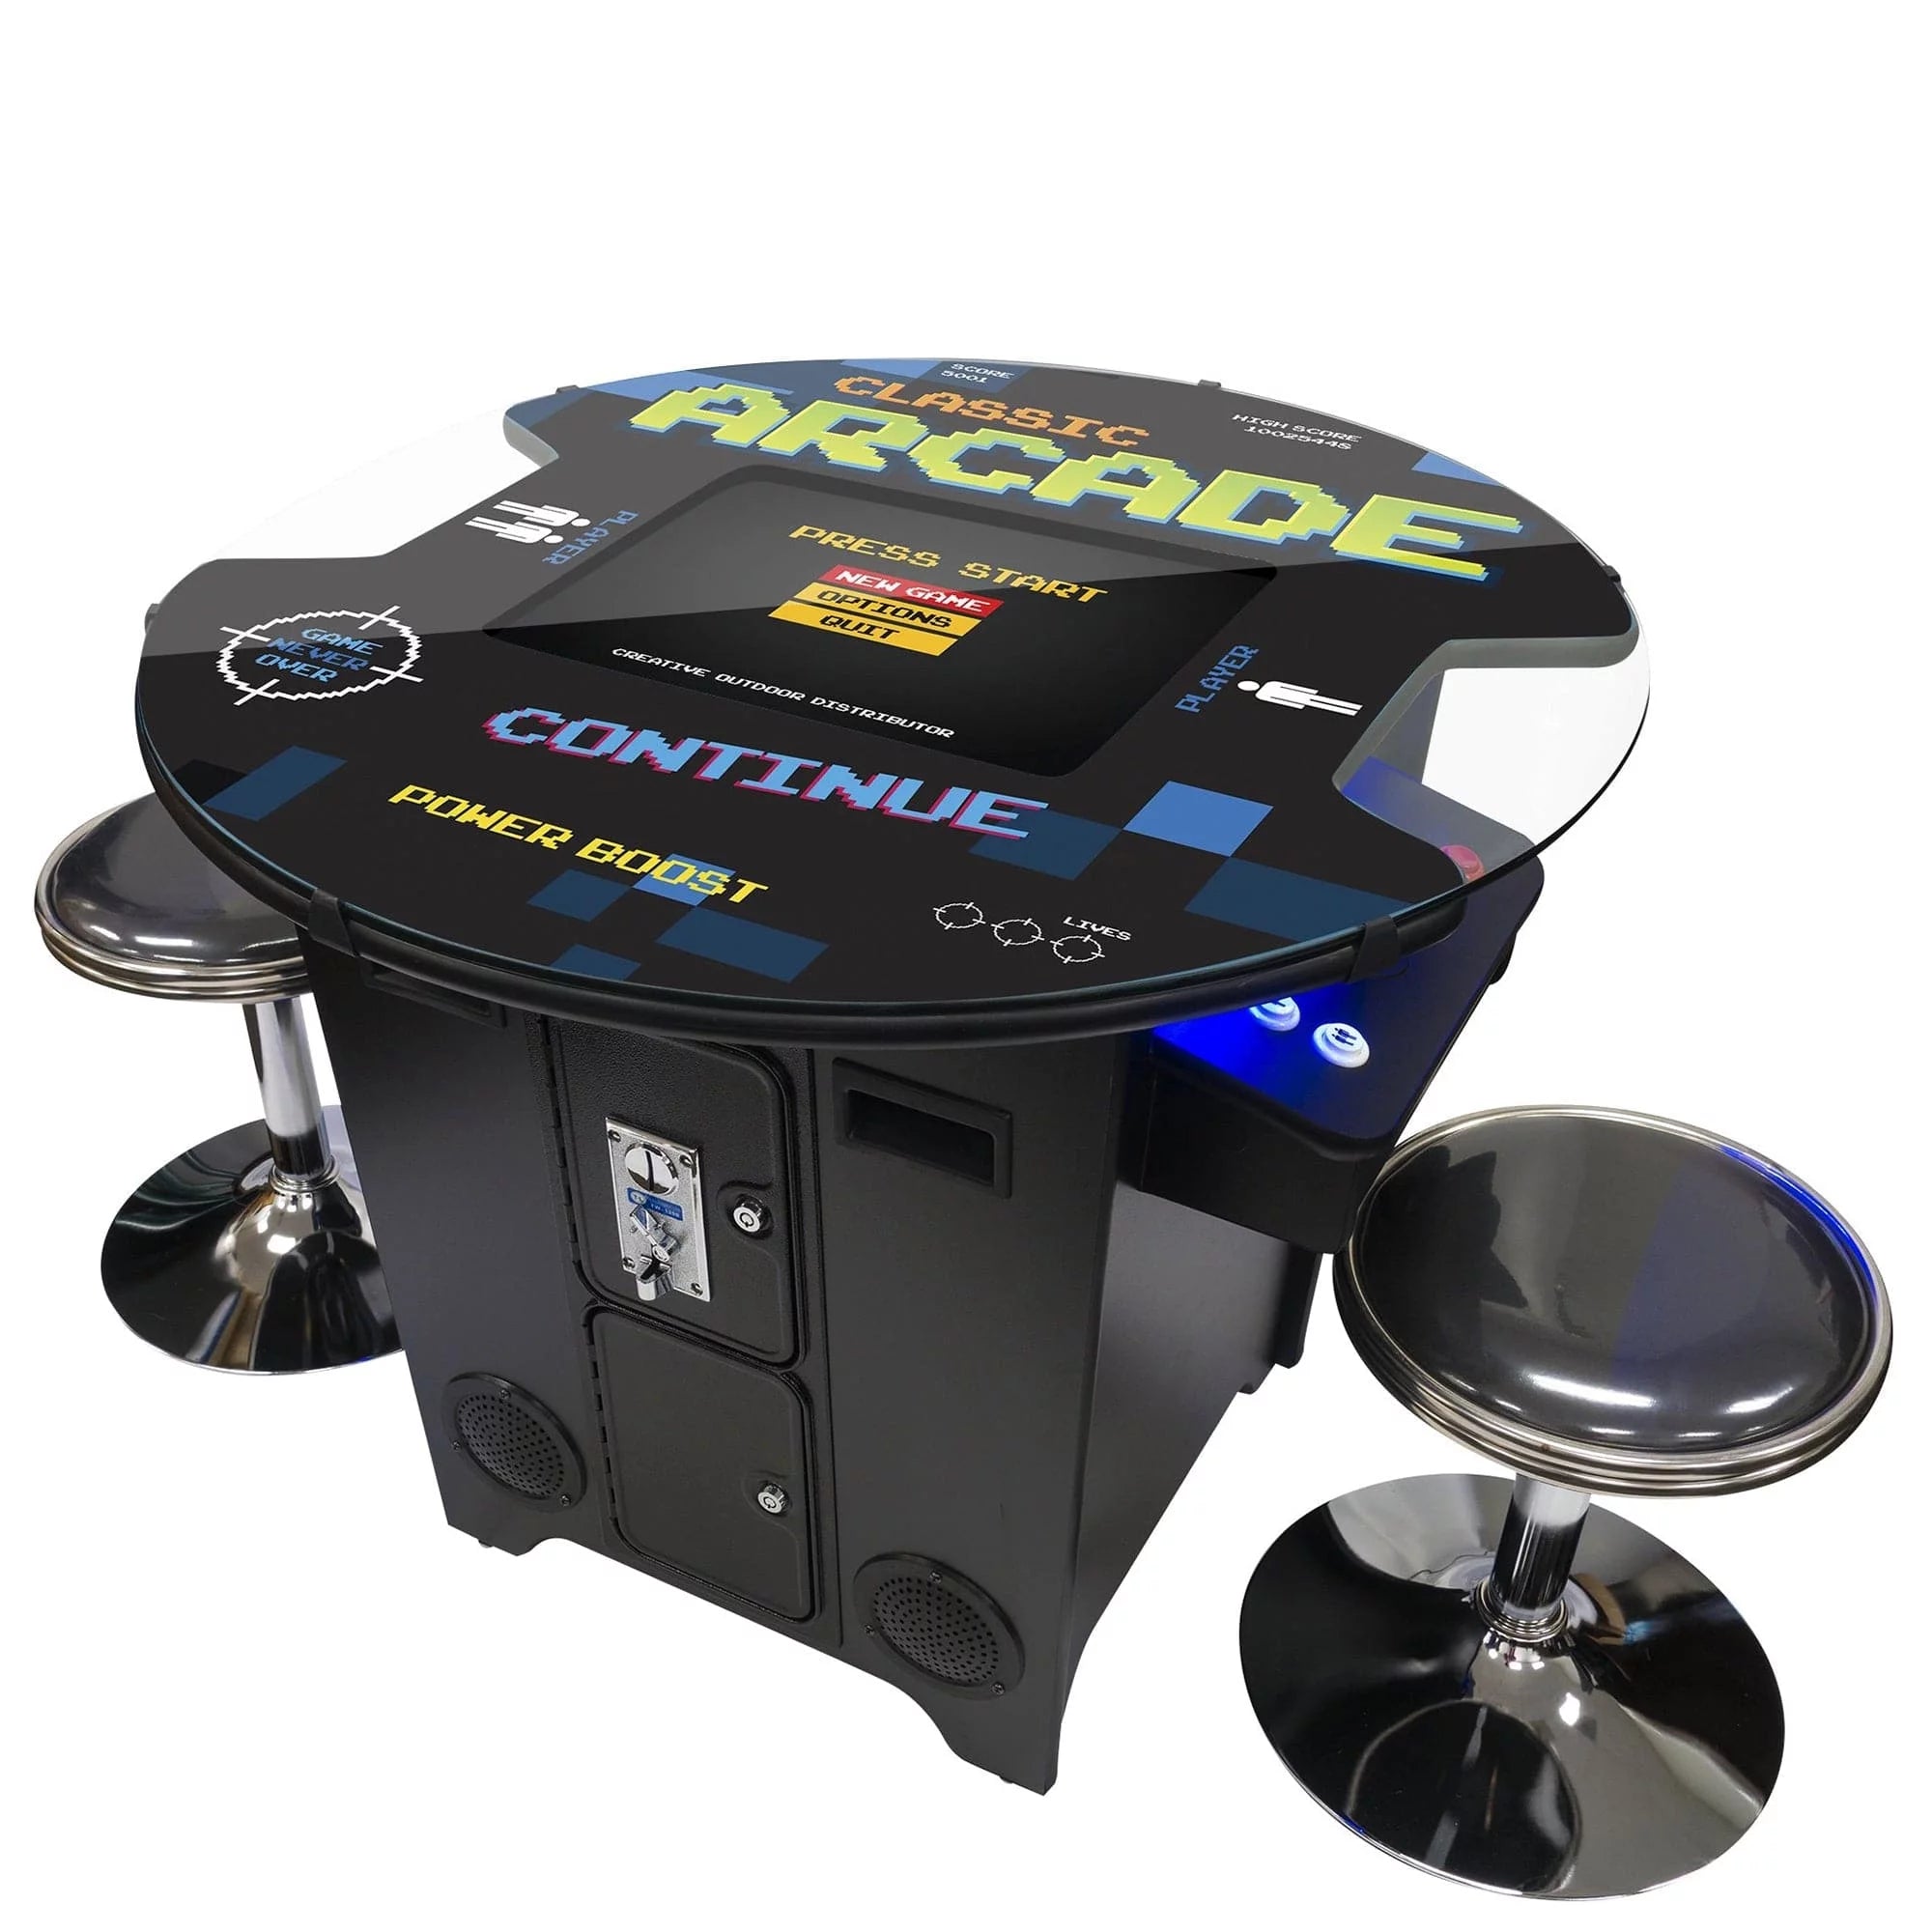 2p Short pub Table with trackball | Arcade Games - Creative Arcades